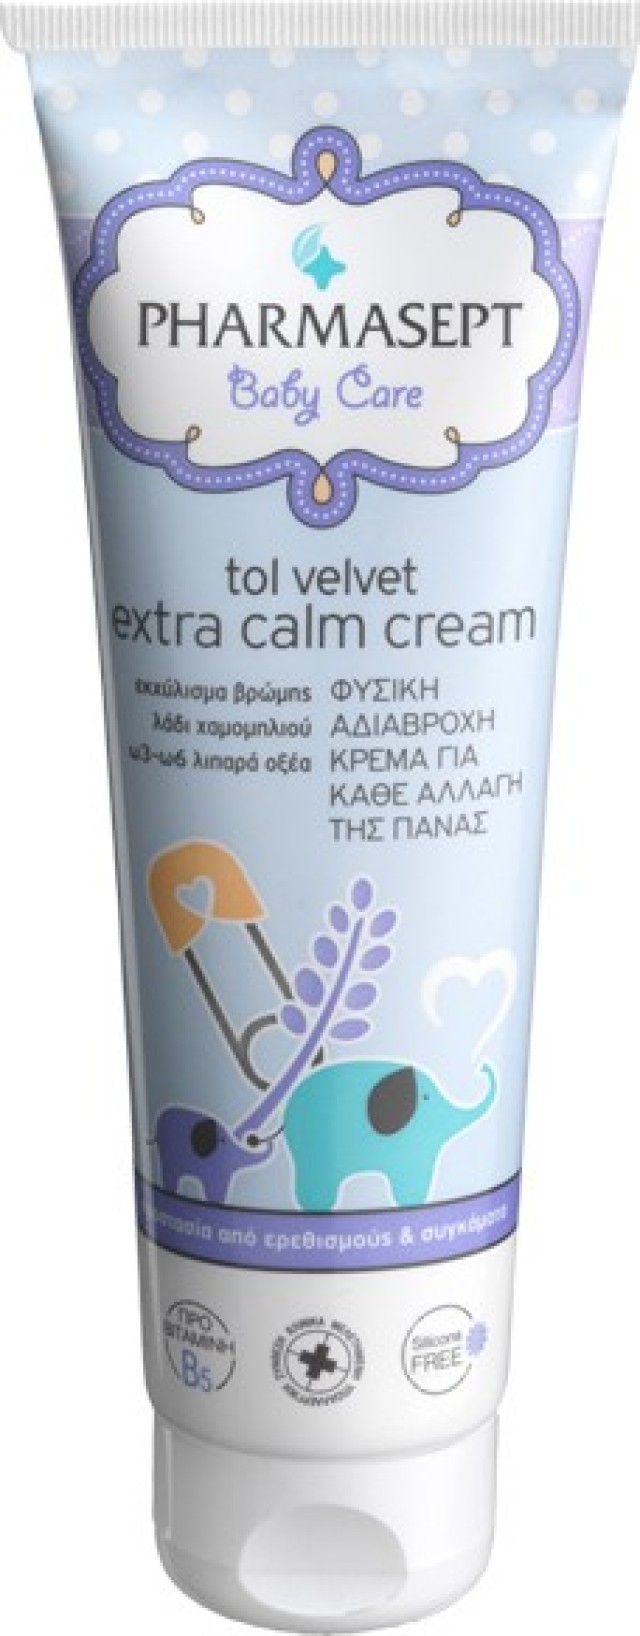 Pharmasept Tol Velvet Baby Extra Calm Cream Προστατευτική Κρέμα για Αλλαγή Πάνας 150ml